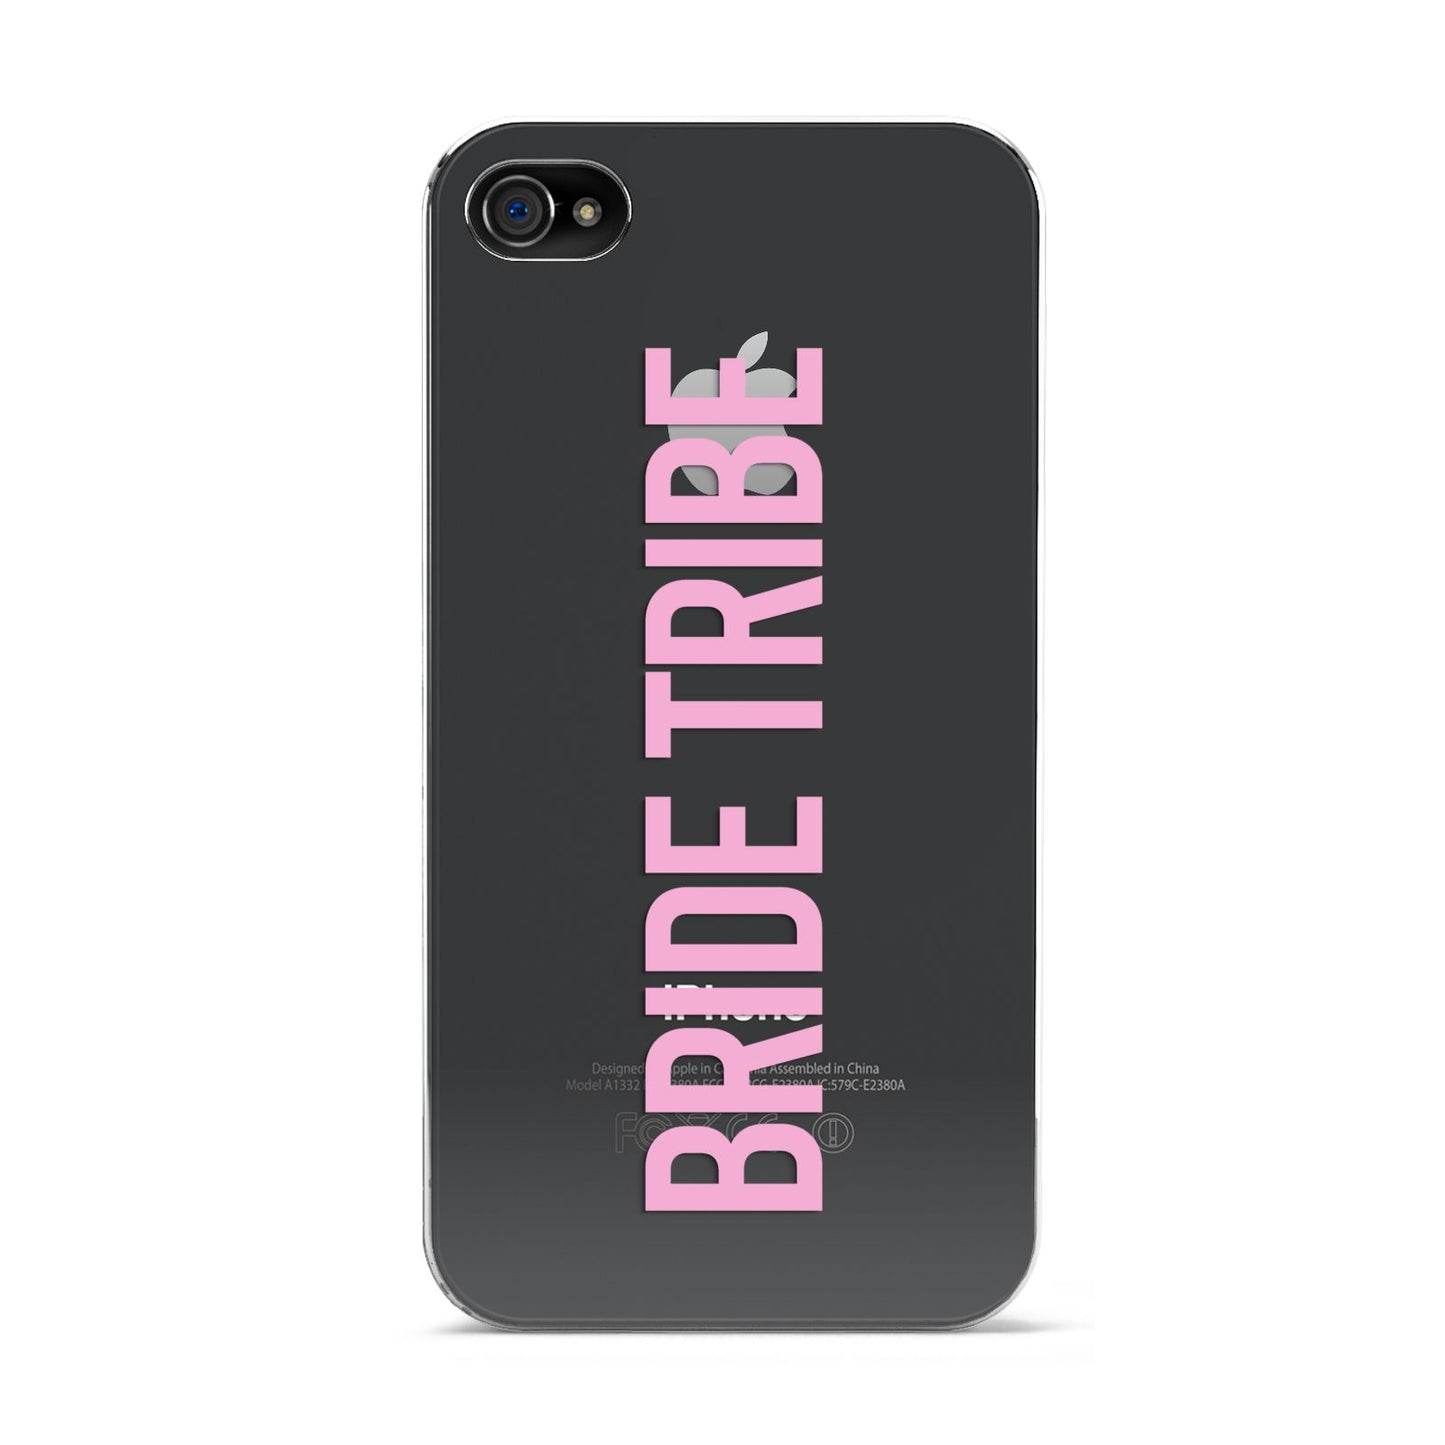 Bride Tribe Apple iPhone 4s Case